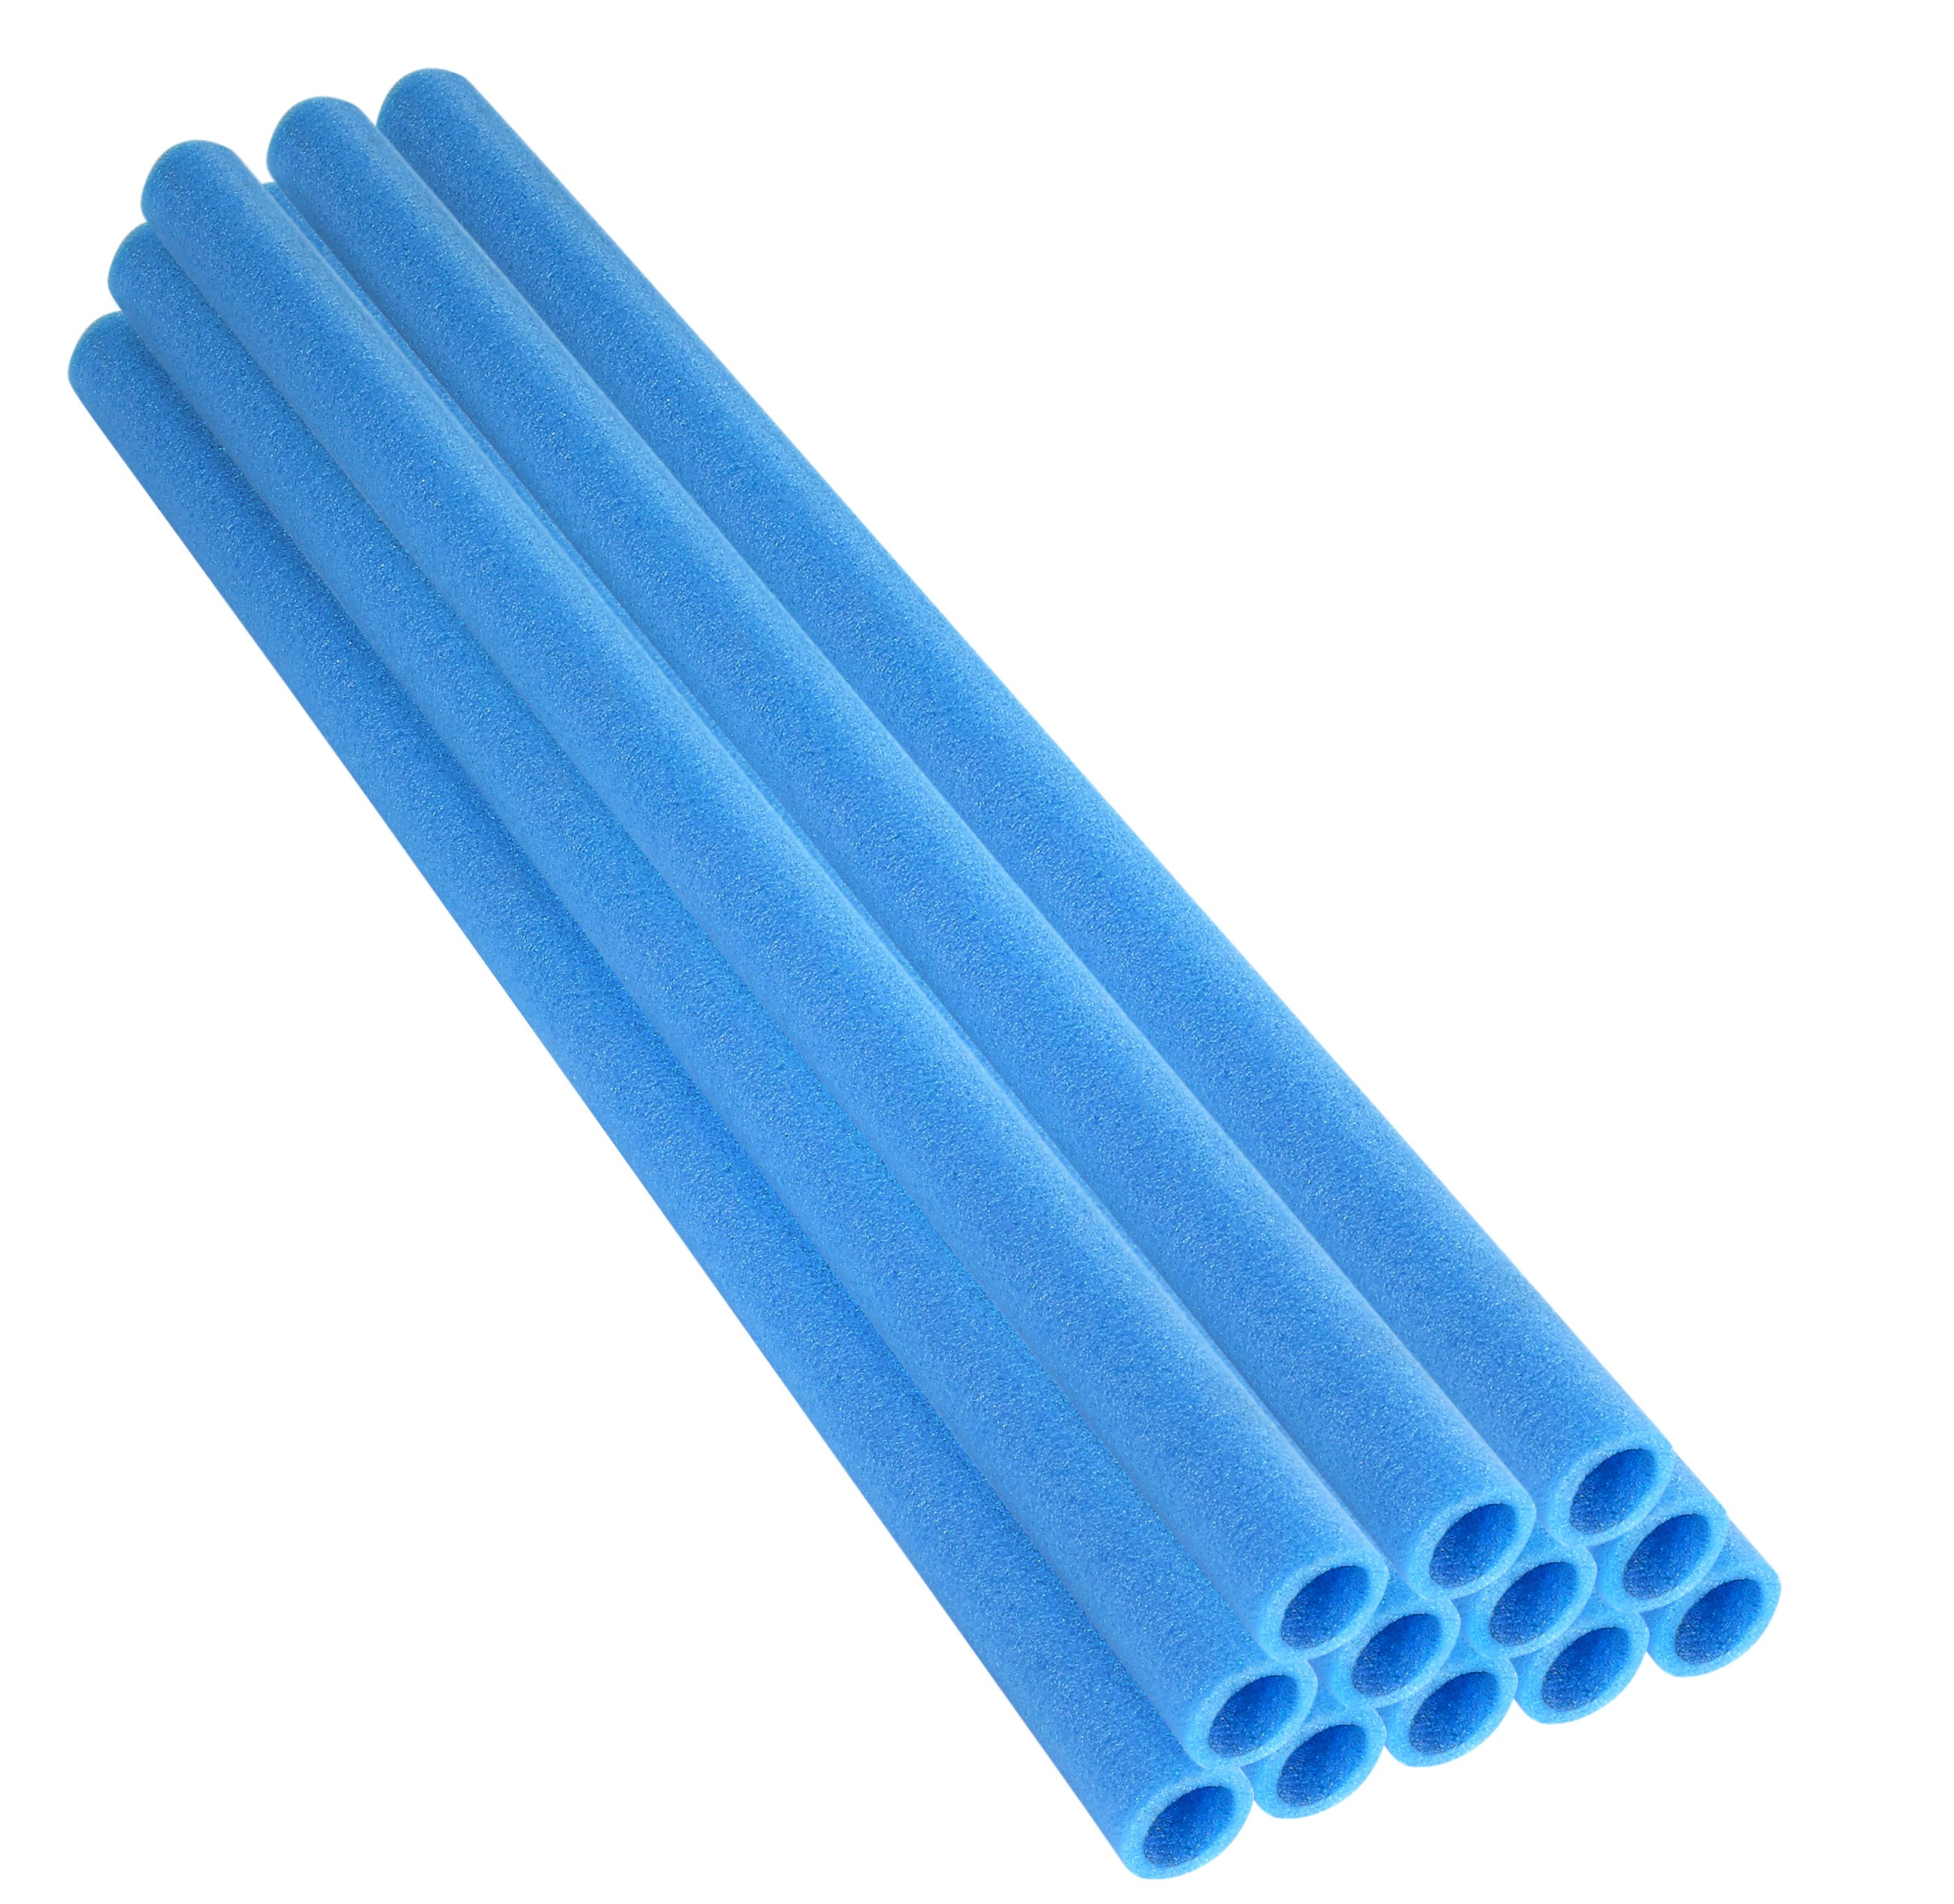 33 Inch Trampoline Pole Foam Sleeves, fits for 1" Diameter Pole - Set of 12 - Blue